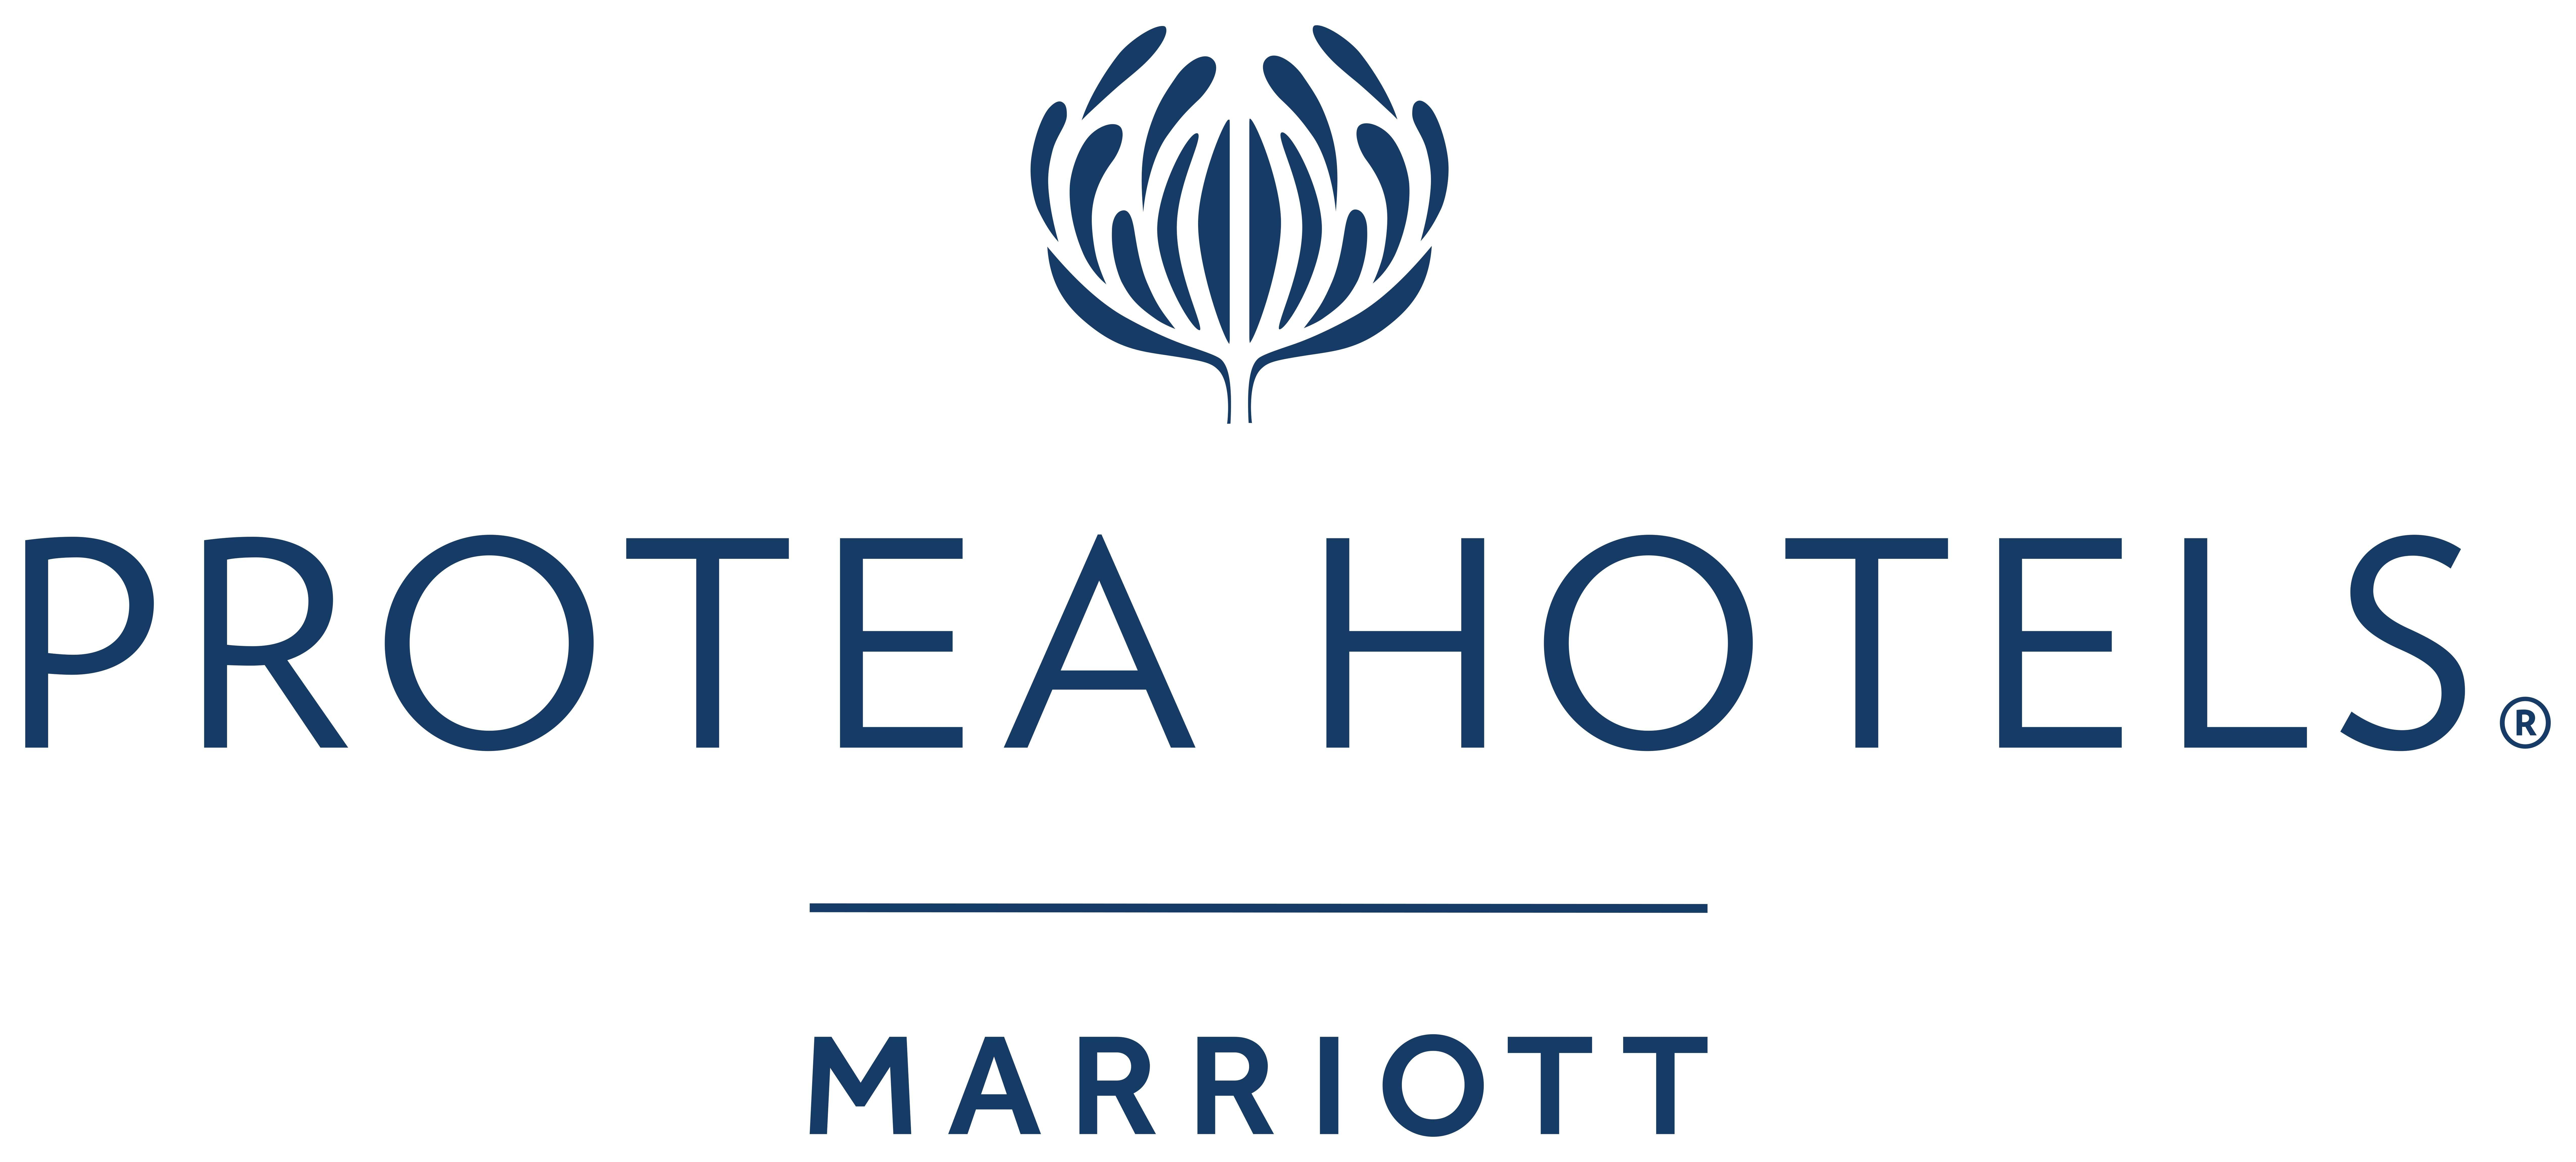 Residence Inn by Marriott Logo - Brand Photos & Logos | Marriott News Center